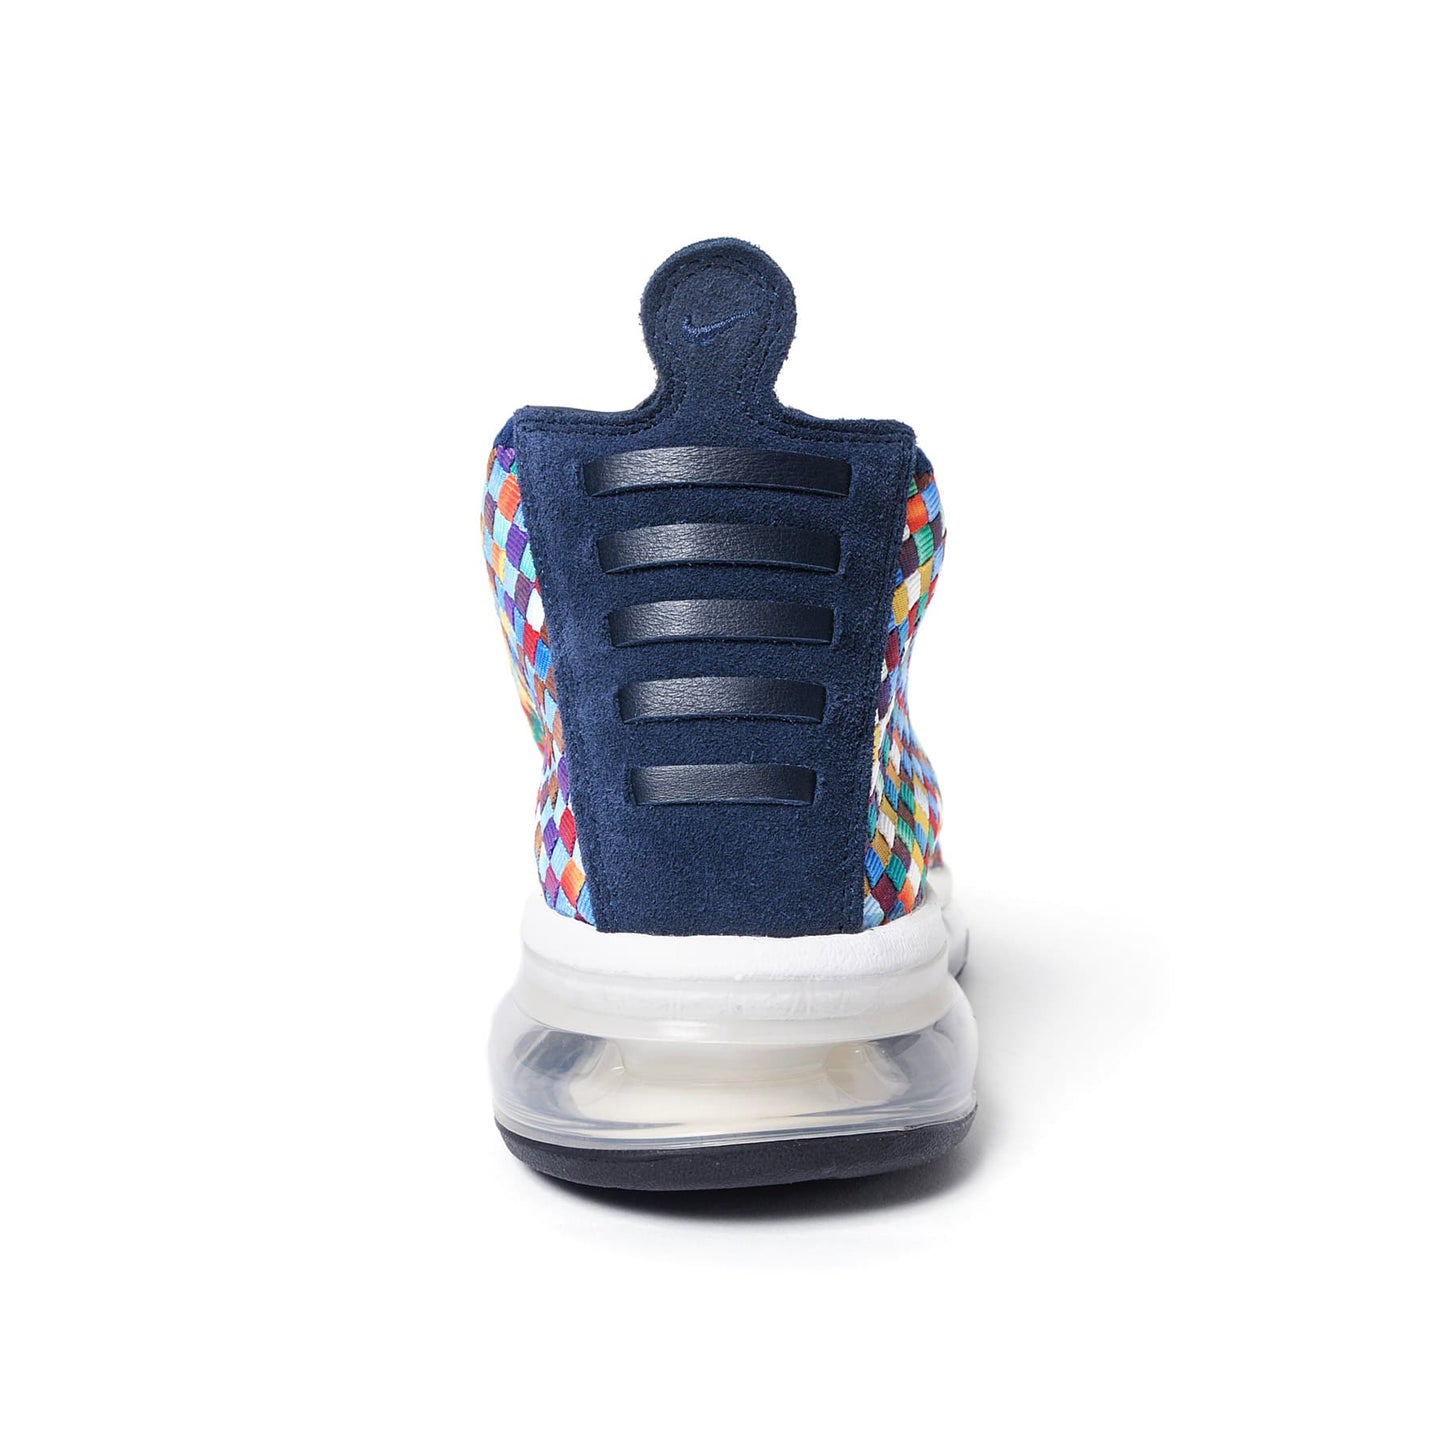 Nike Air Max Woven Boot SE. ‘Multicolor’